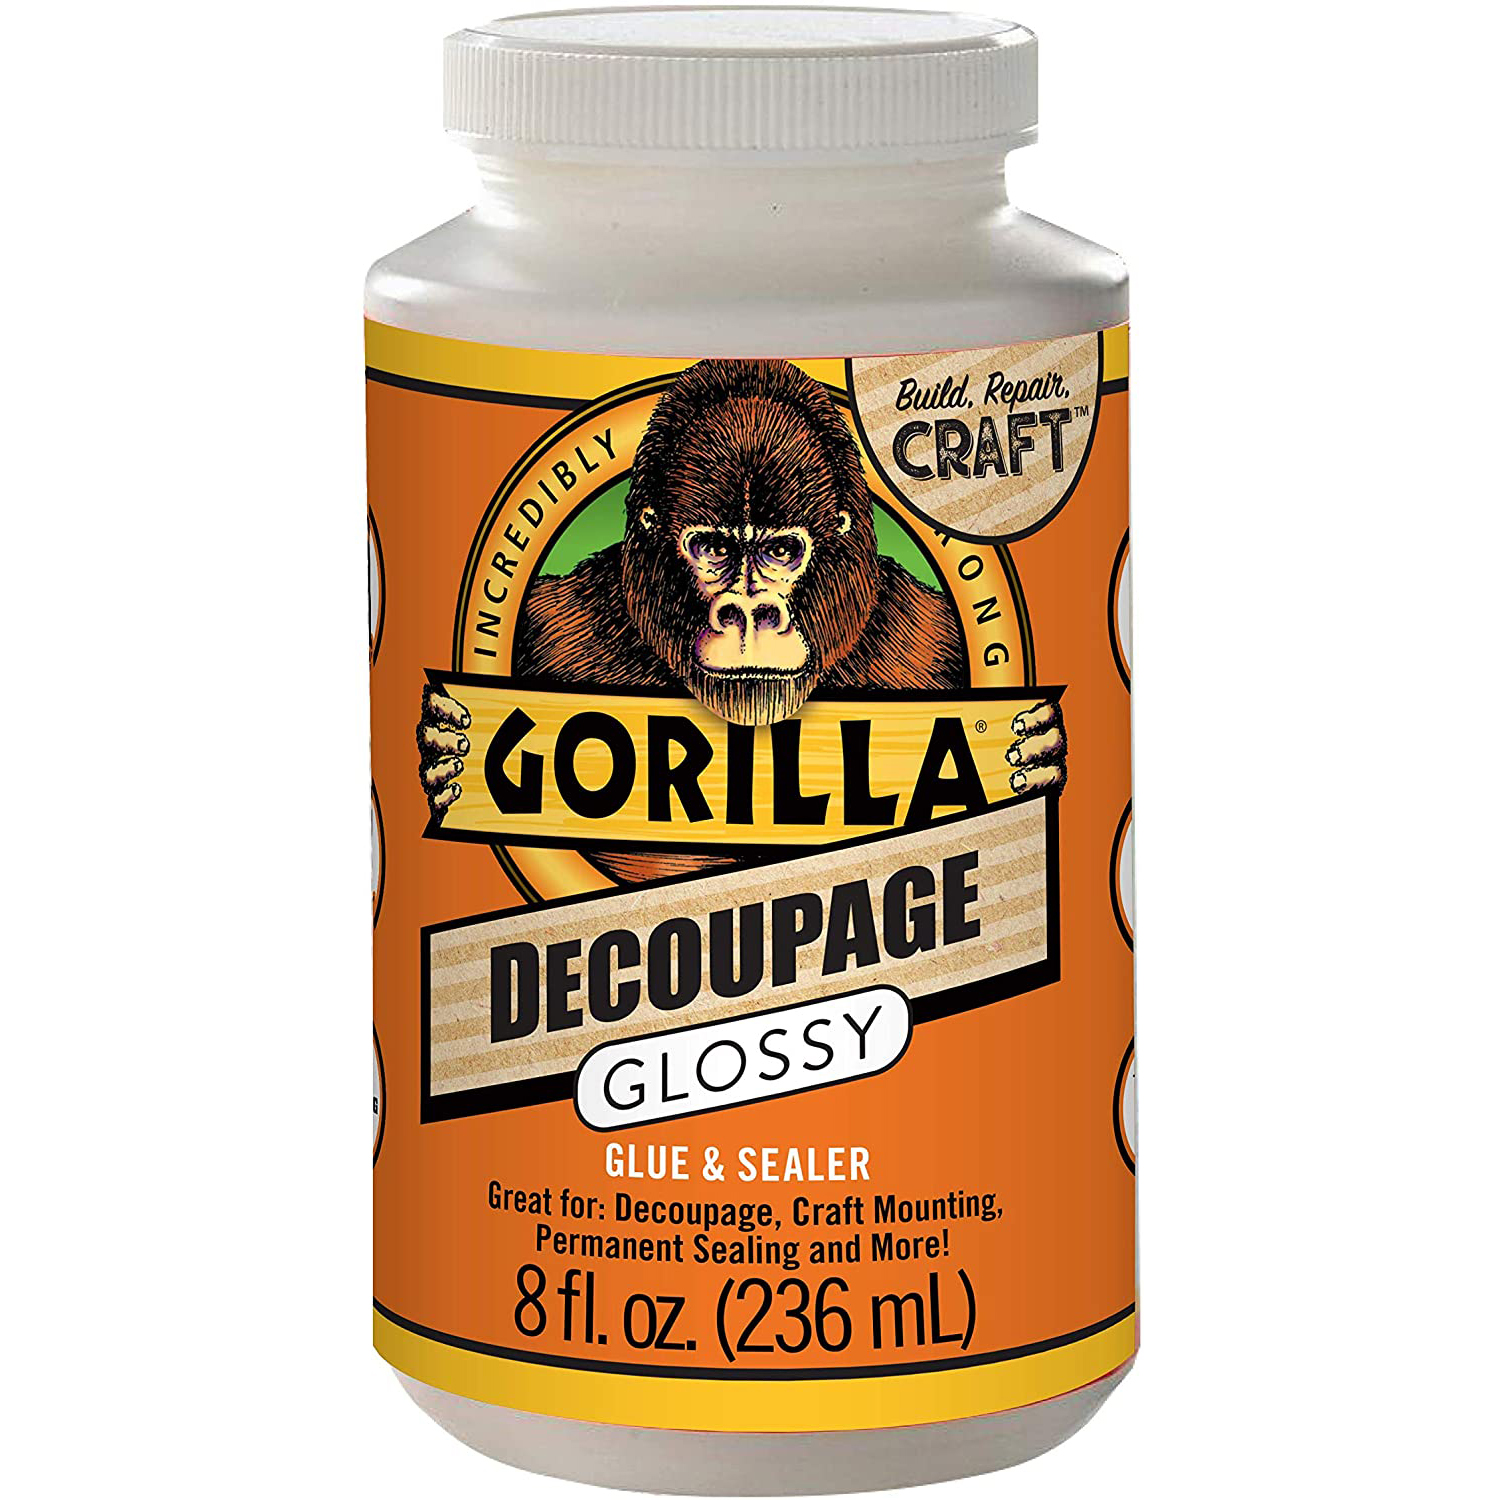 Gorilla Decoupage Glossy Glue &amp; Sealer [Discontinued]